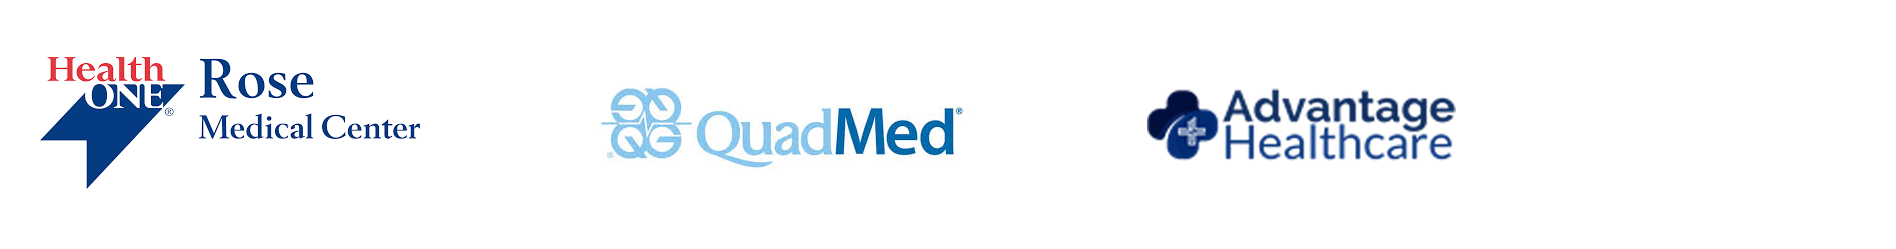 Rose Medica Center, Quad Med, and Advantage Healthcare logos